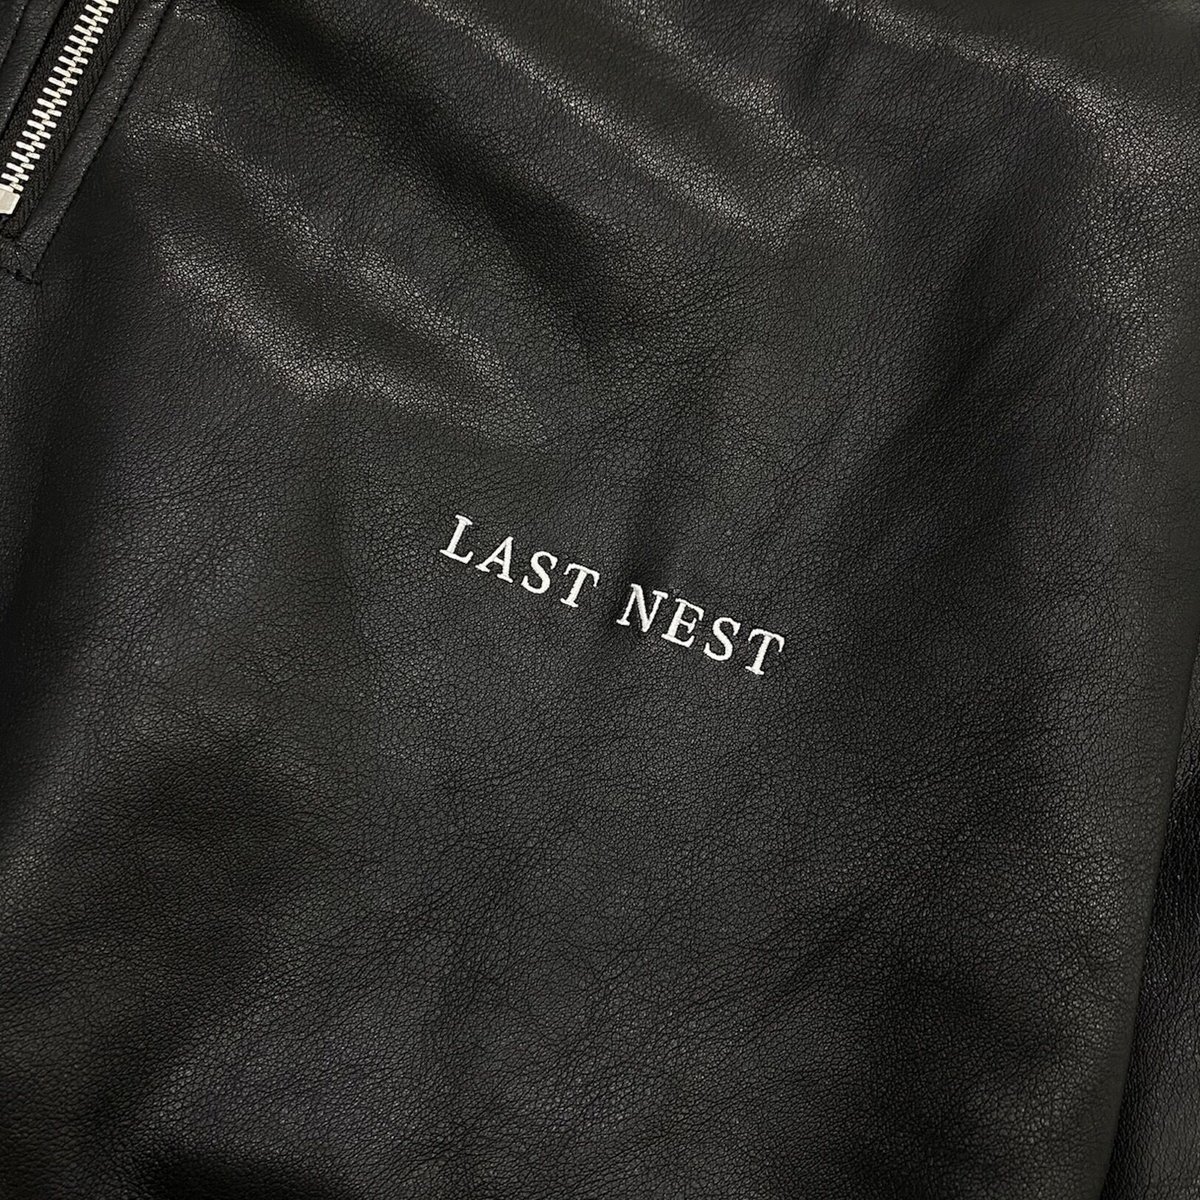 LAST NEST leather down jacket